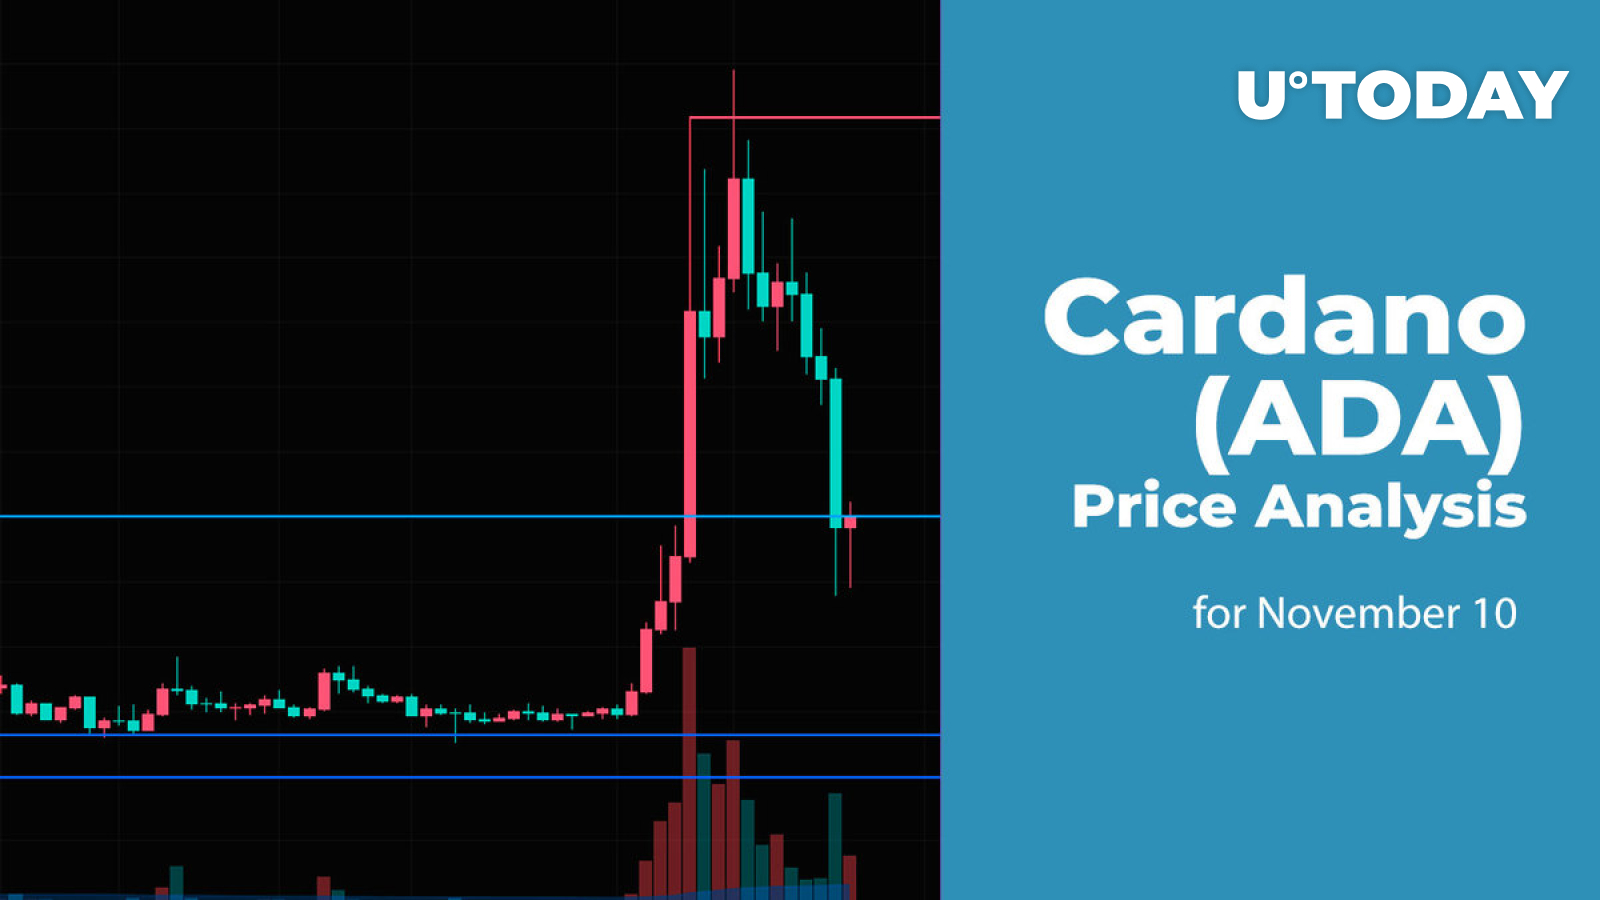 Cardano (ADA) Price Analysis for November 10